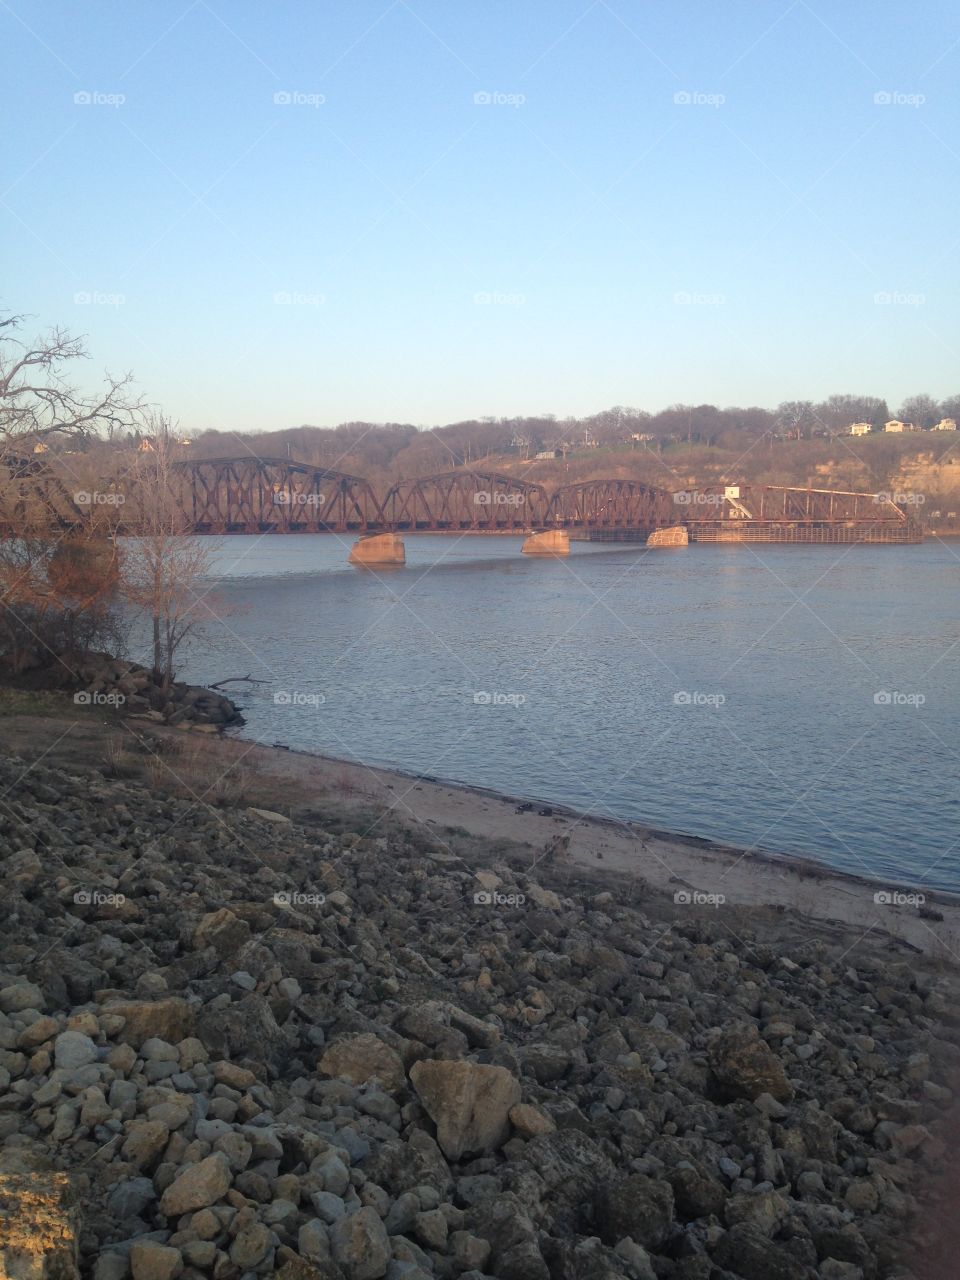 Train crossing . Train bridge across the Mississippi River 